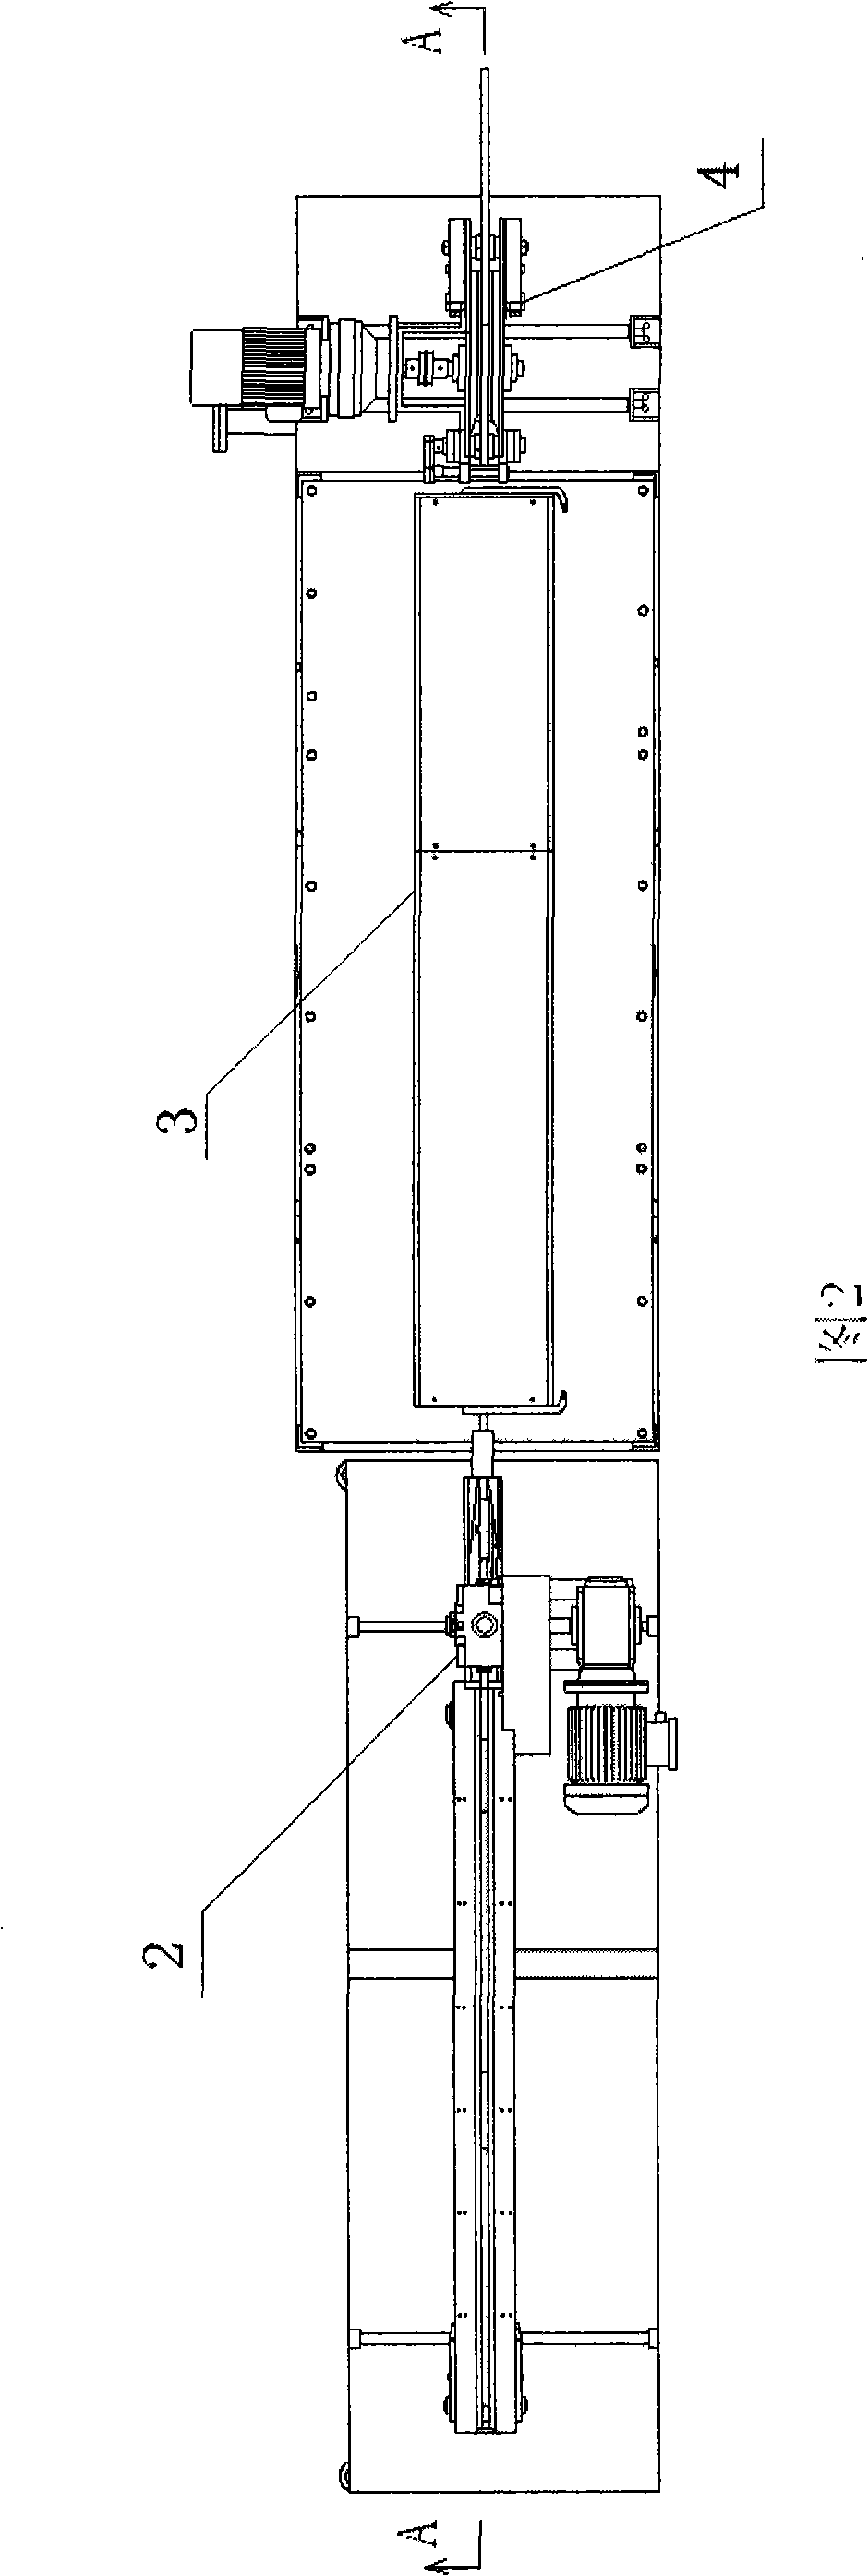 Automatic heating mechanism